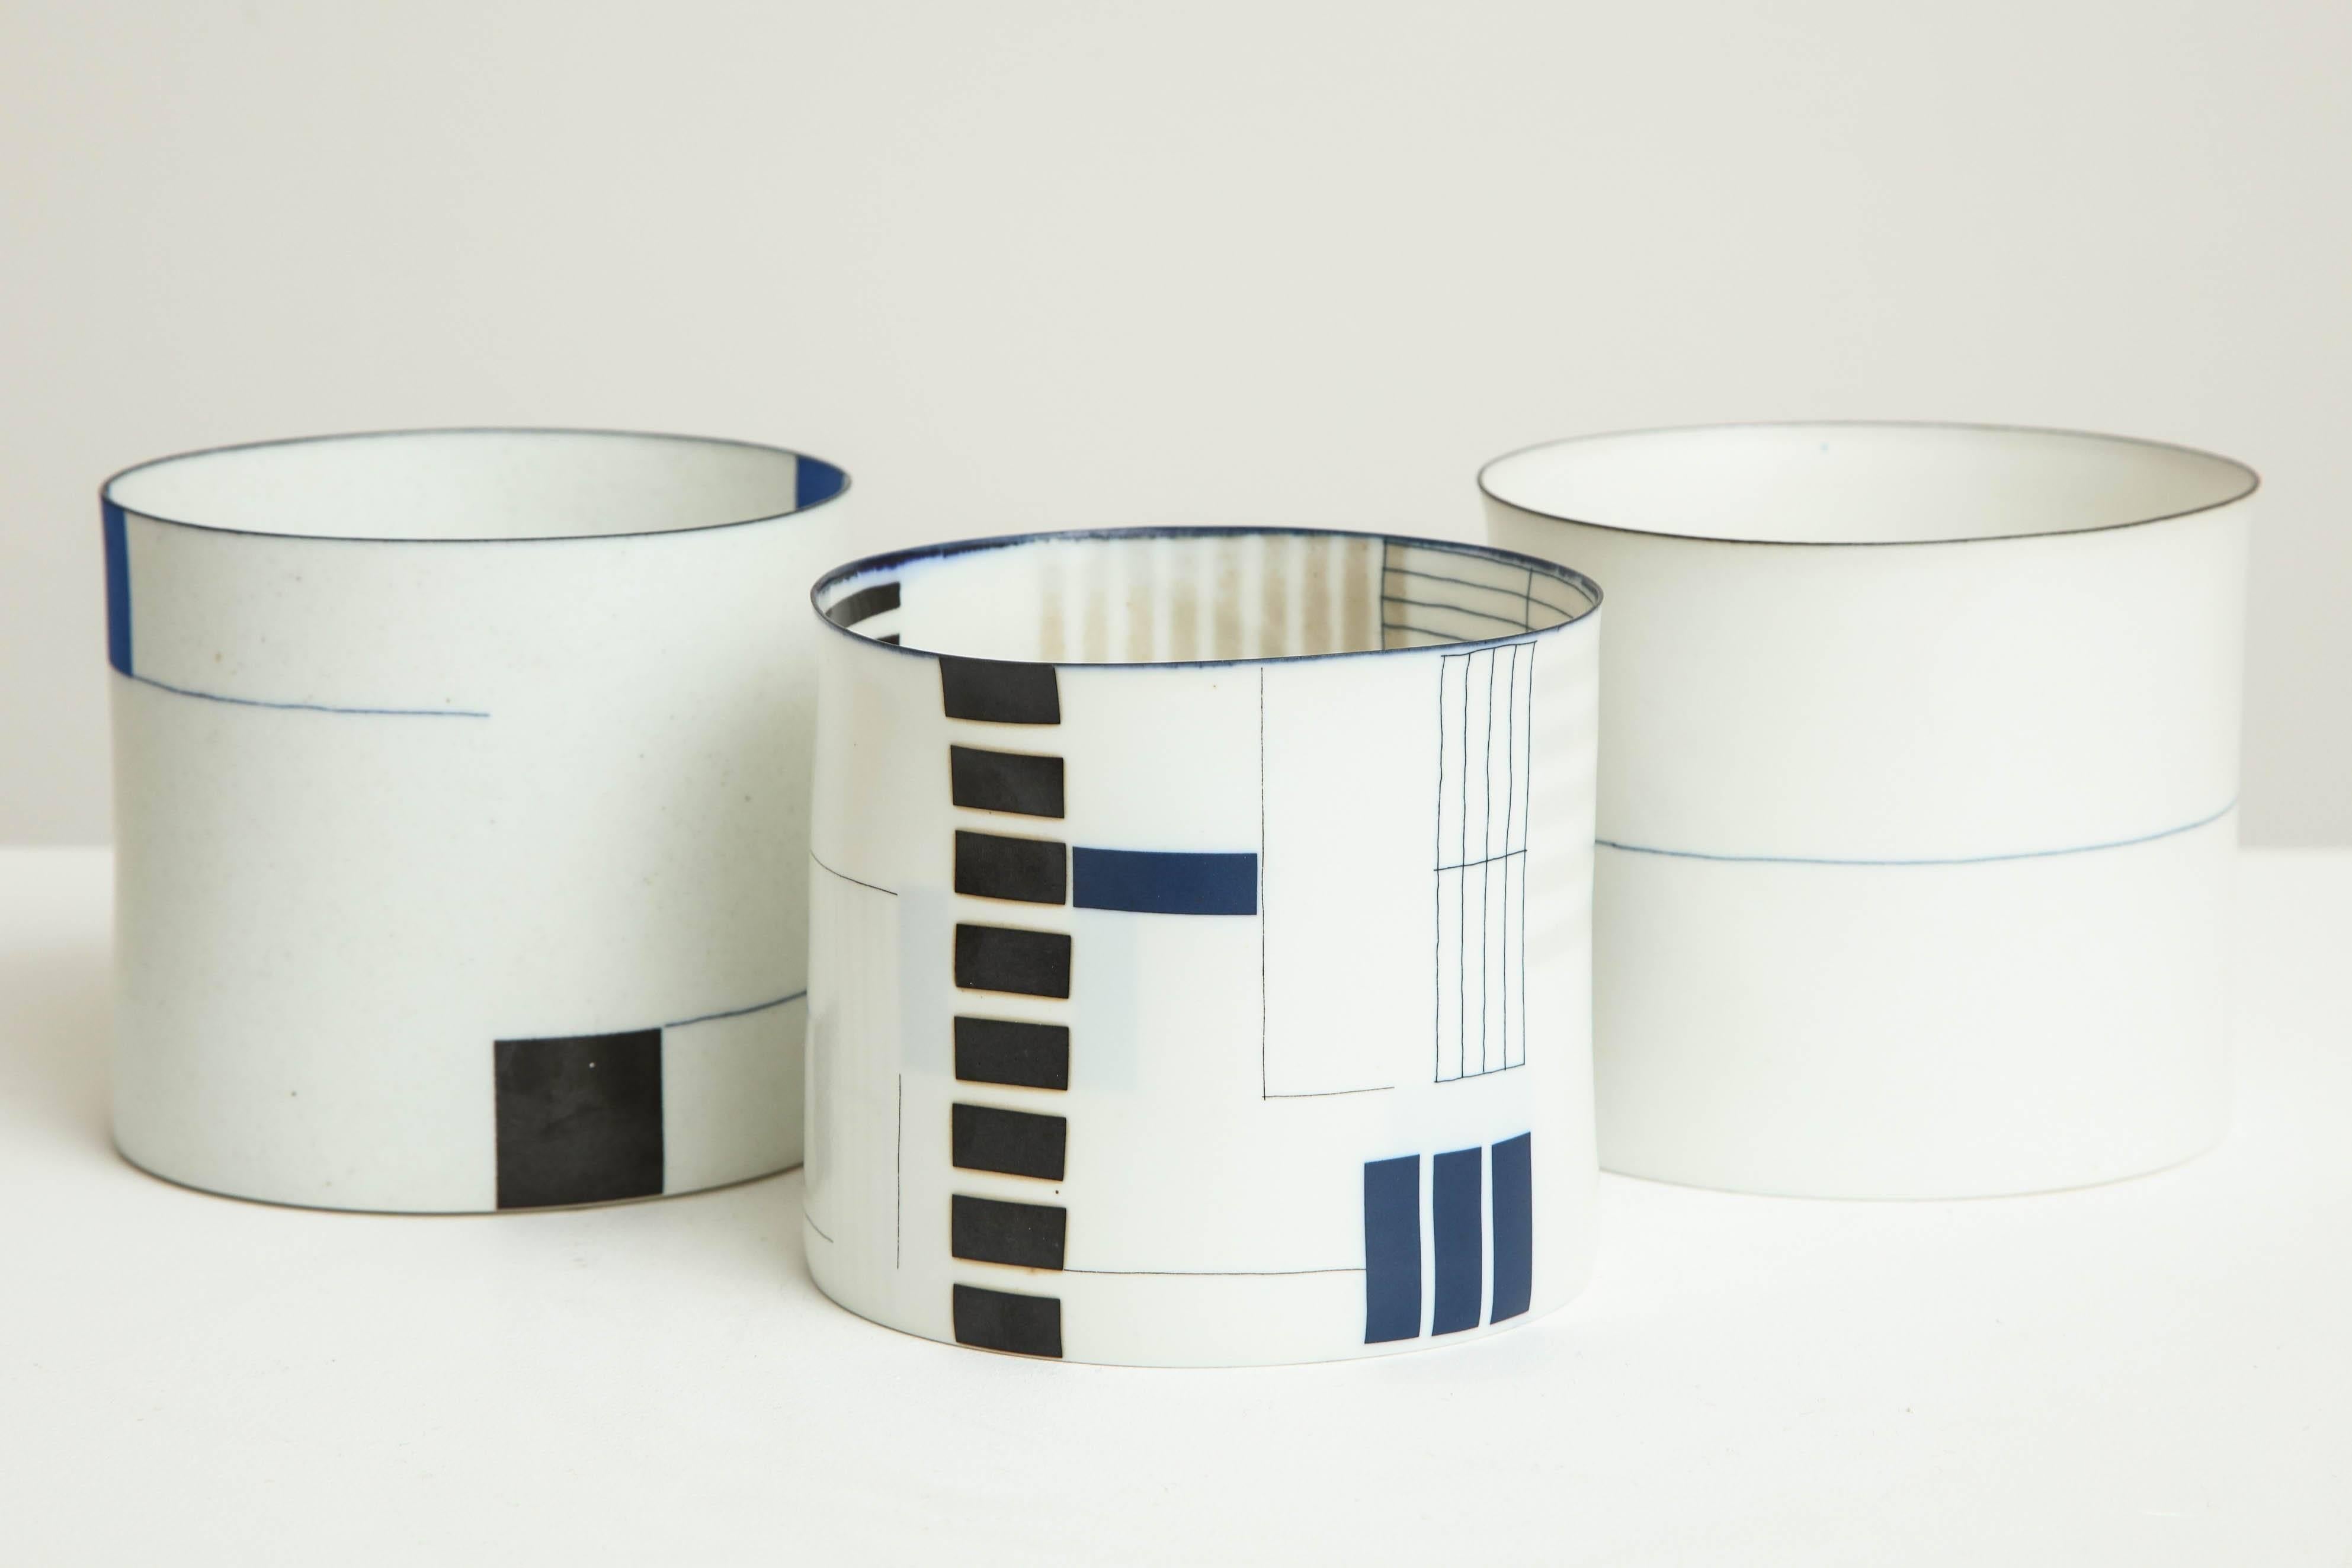 Bodil Manz ceramic vessel with geometric black on white designs, made in Denmark 1